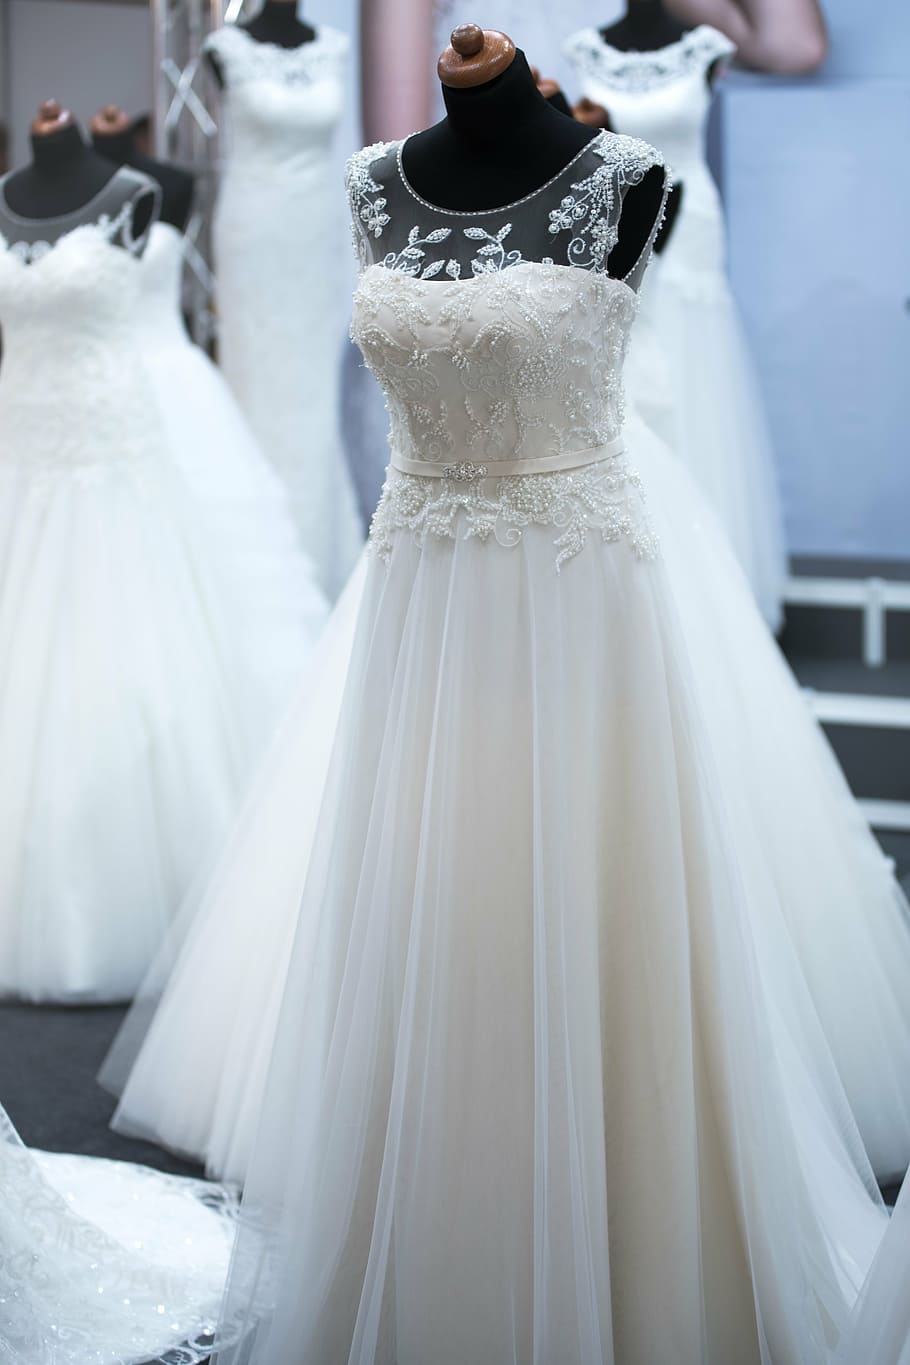 putih, bunga, gaun pengantin tanpa lengan, salon gaun pengantin, pengantin, pernikahan, gaun pengantin, upacara, adopsi, desain